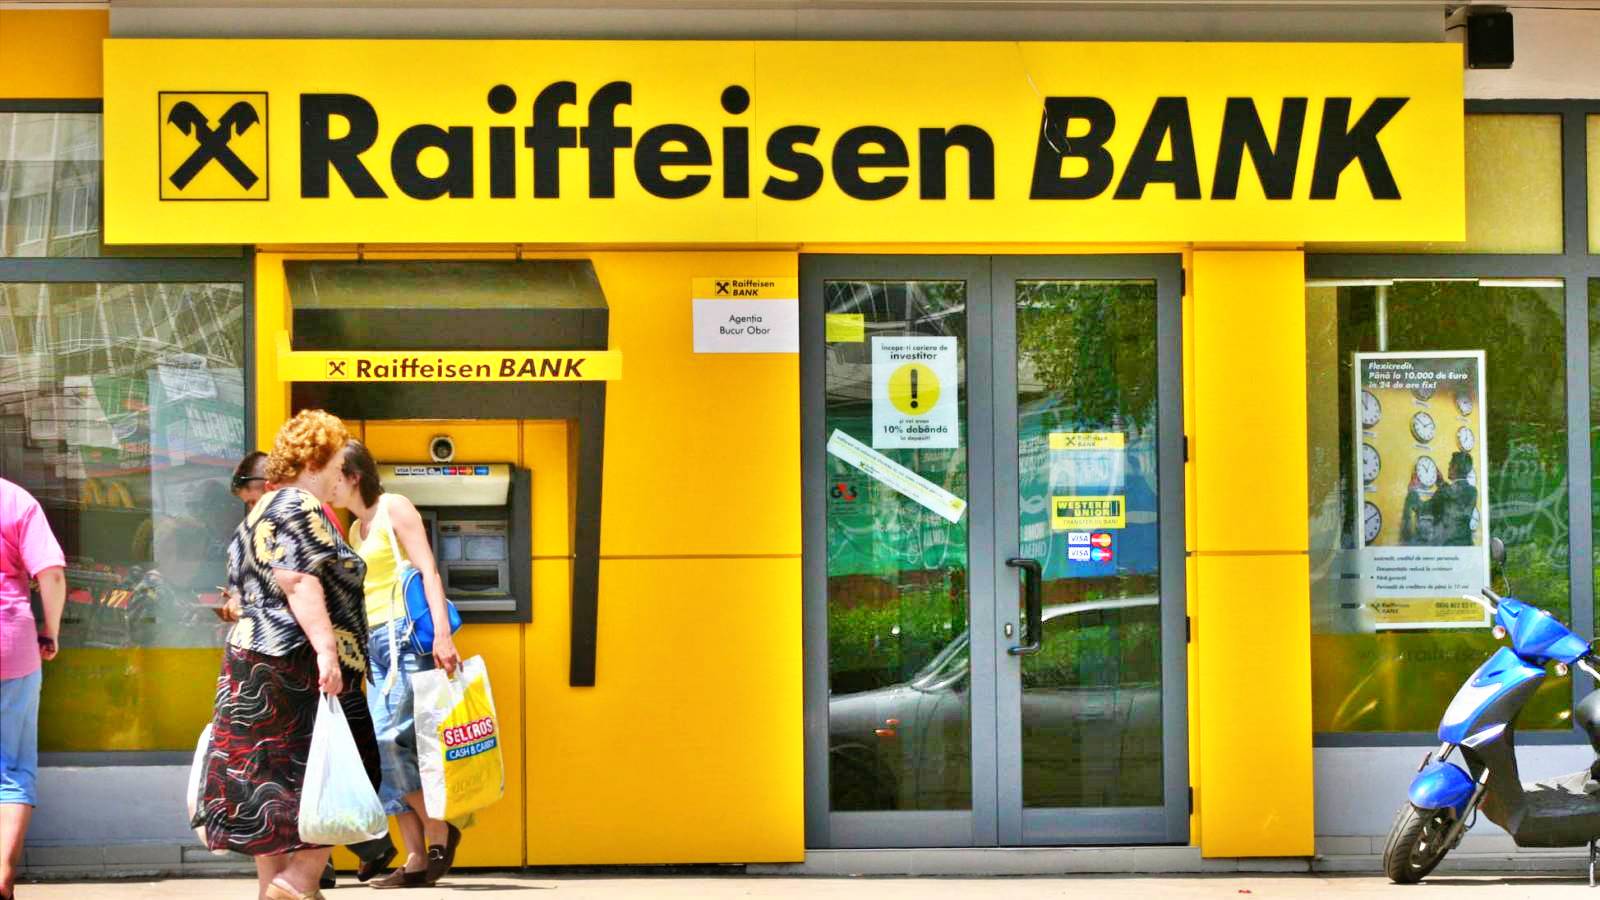 Raiffeisen Bank Anuntul IMPORTANT Clientii Toata Romania